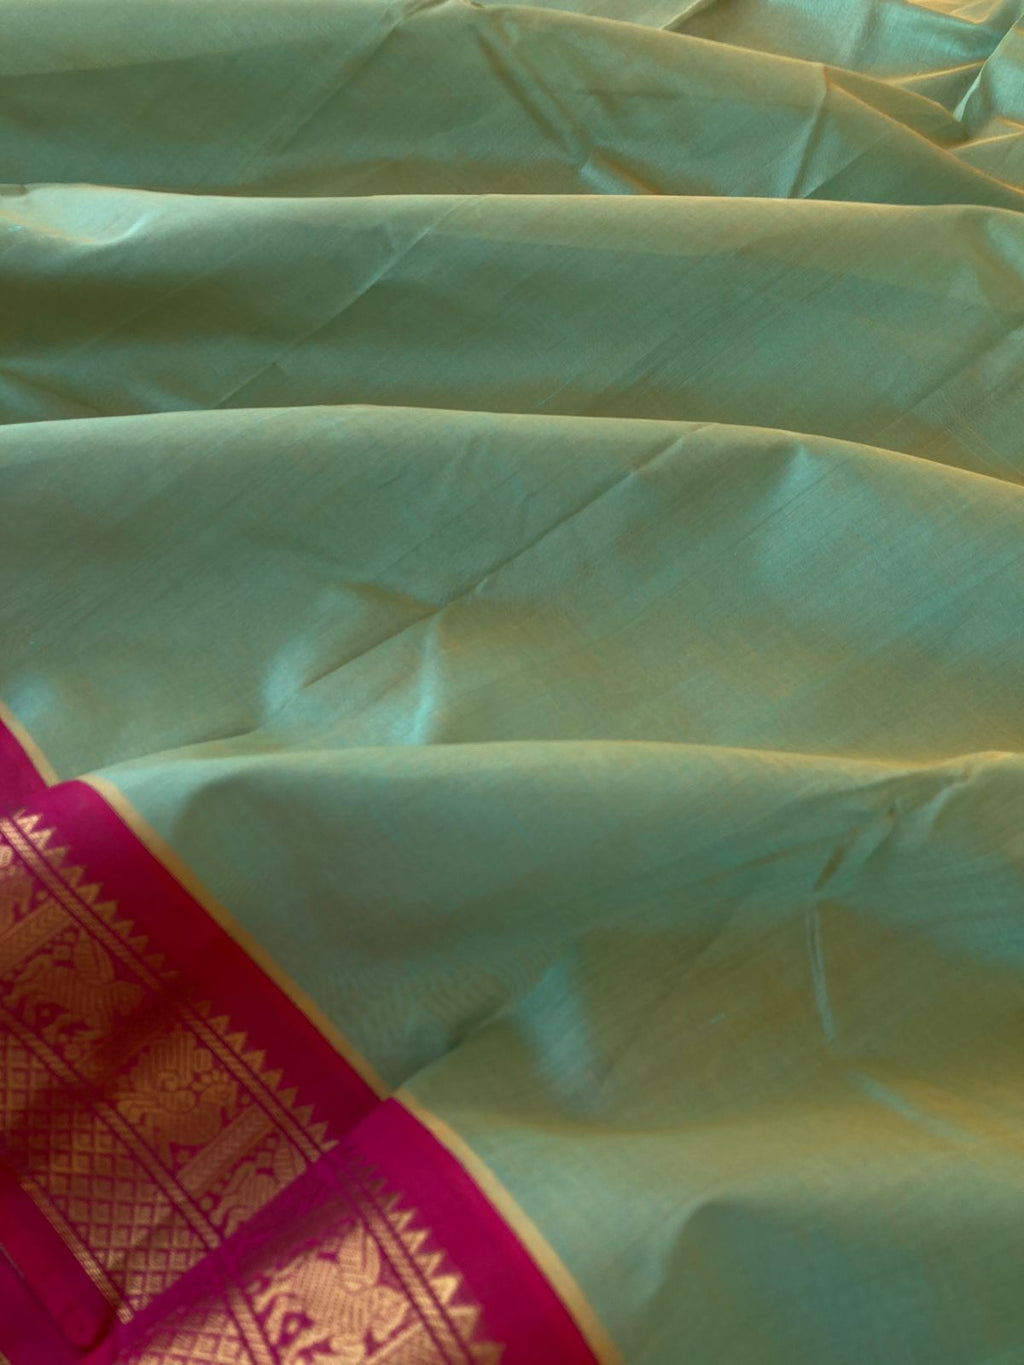 Korvai Silk Cottons - a beautiful mix of dual tone English shade